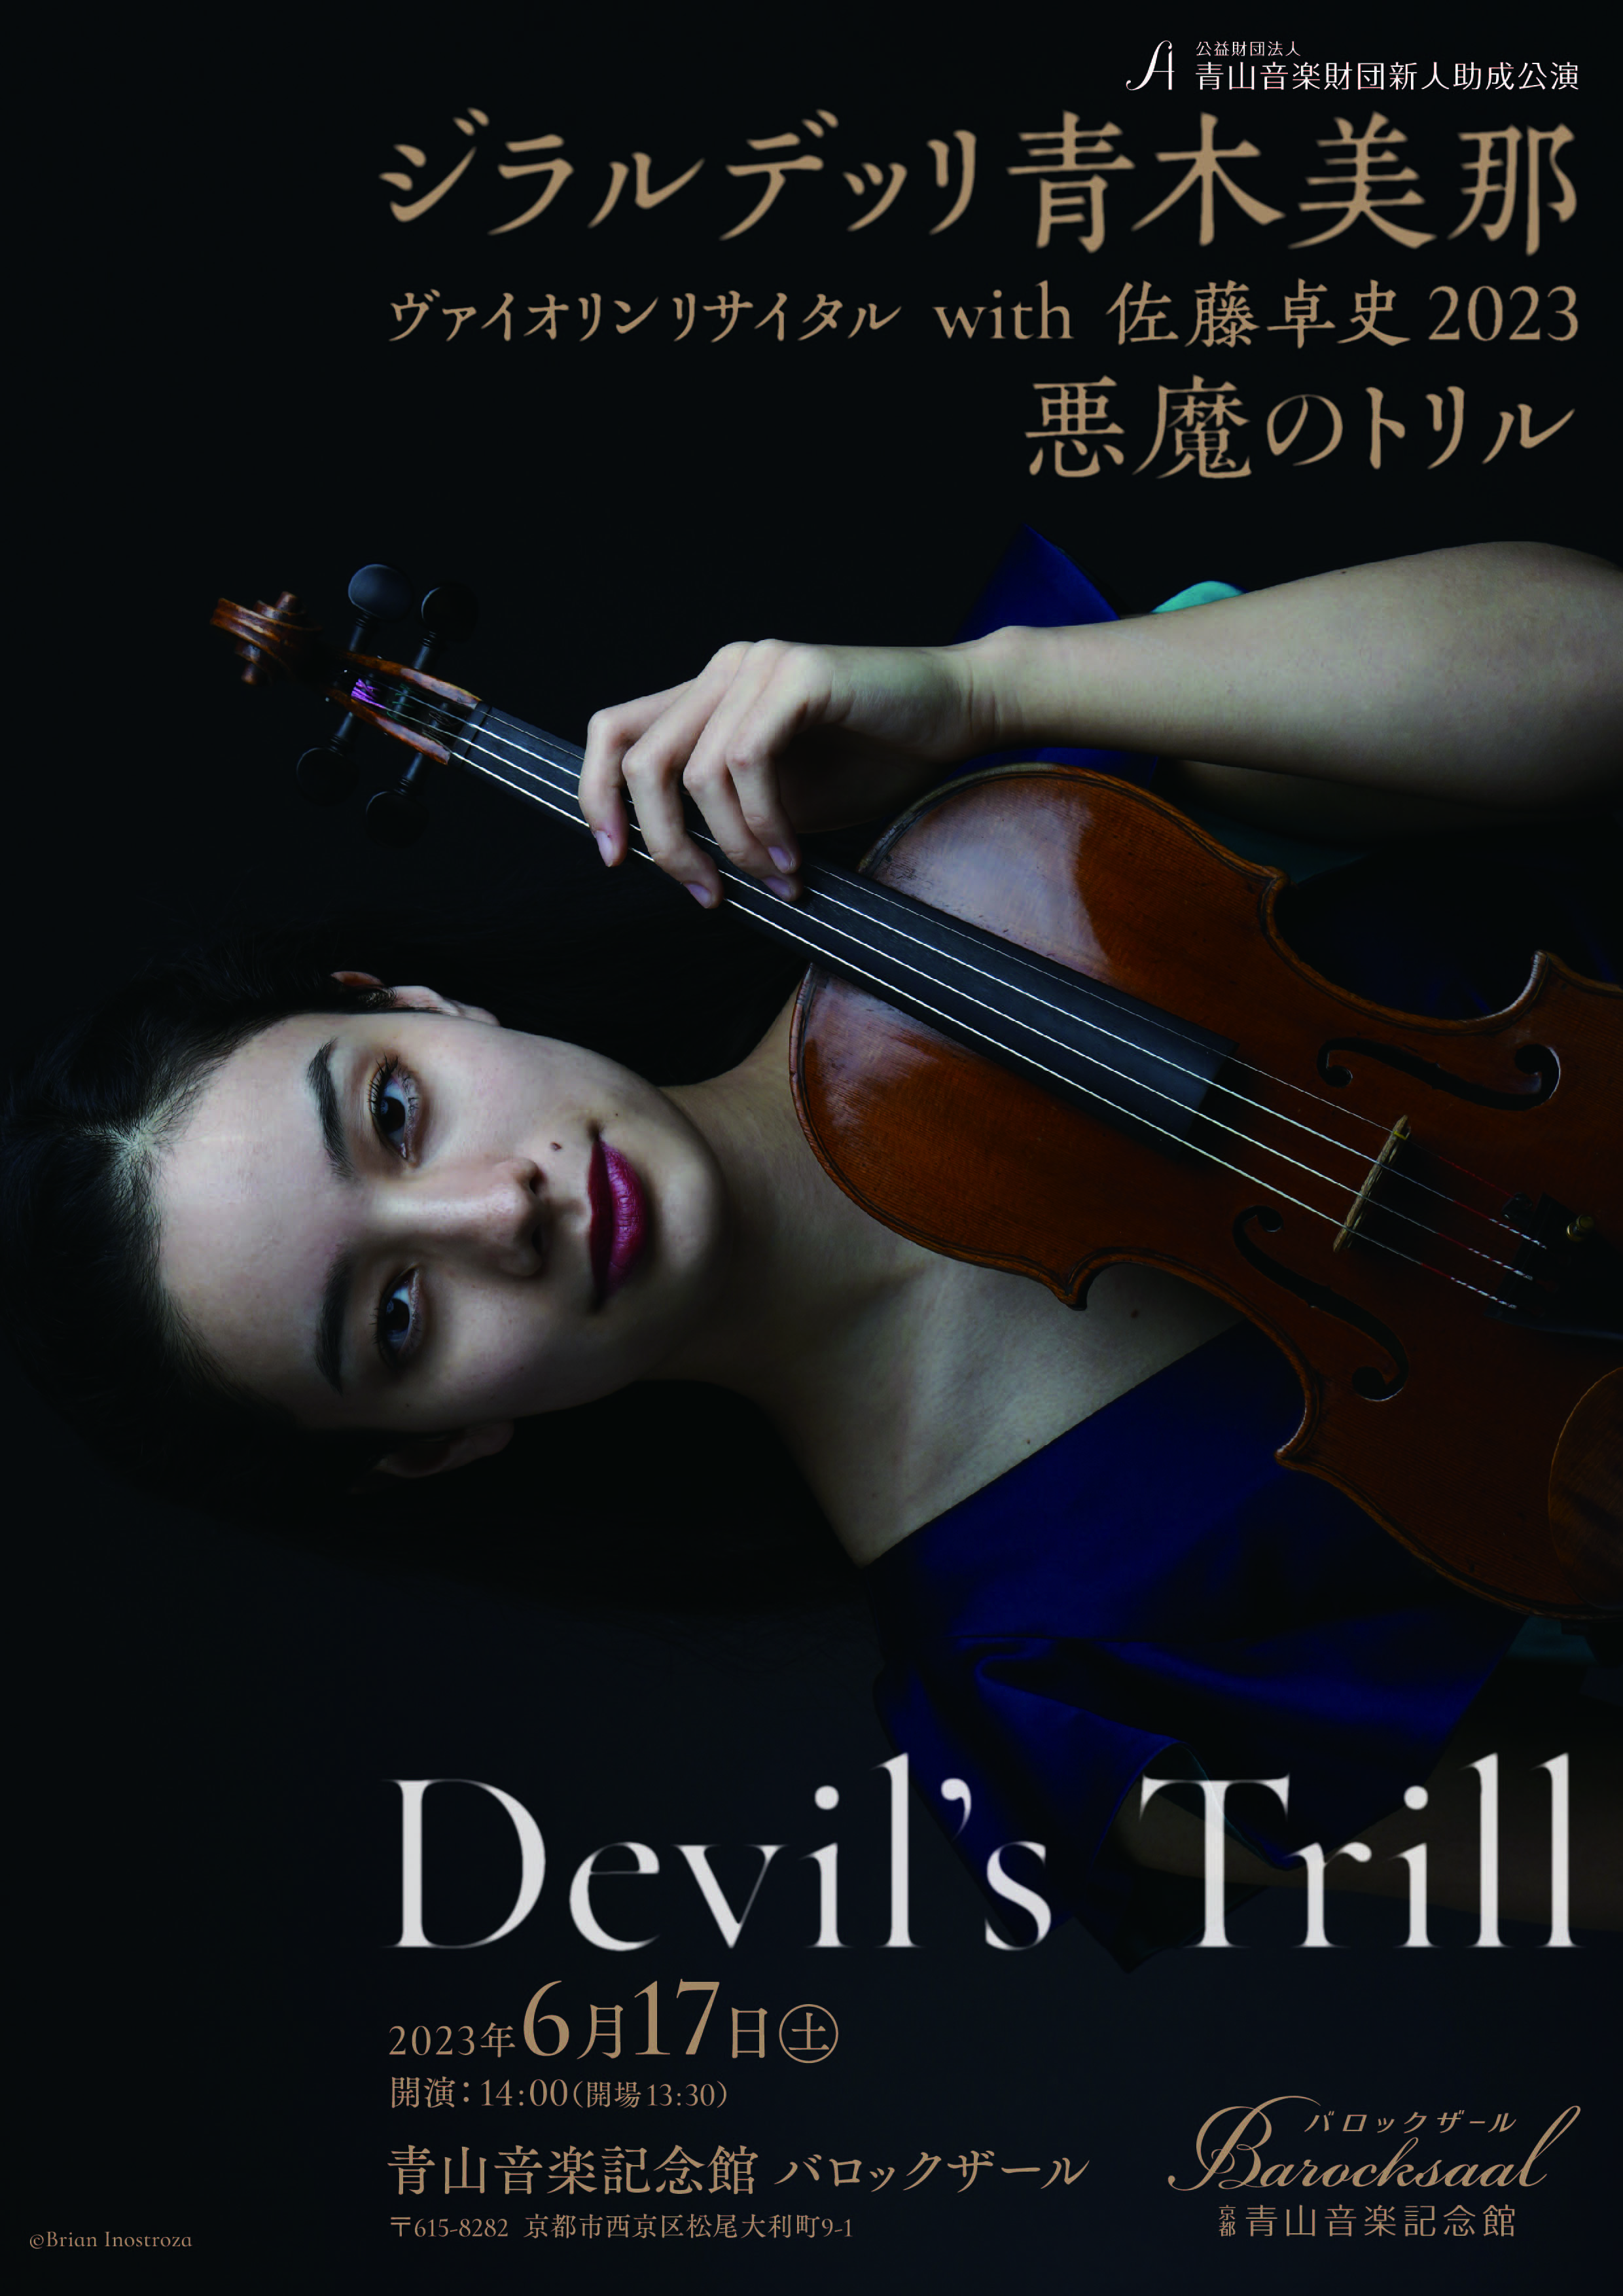 Ghirardelli Mina Aoki Violin Recital with Takushi Satoh